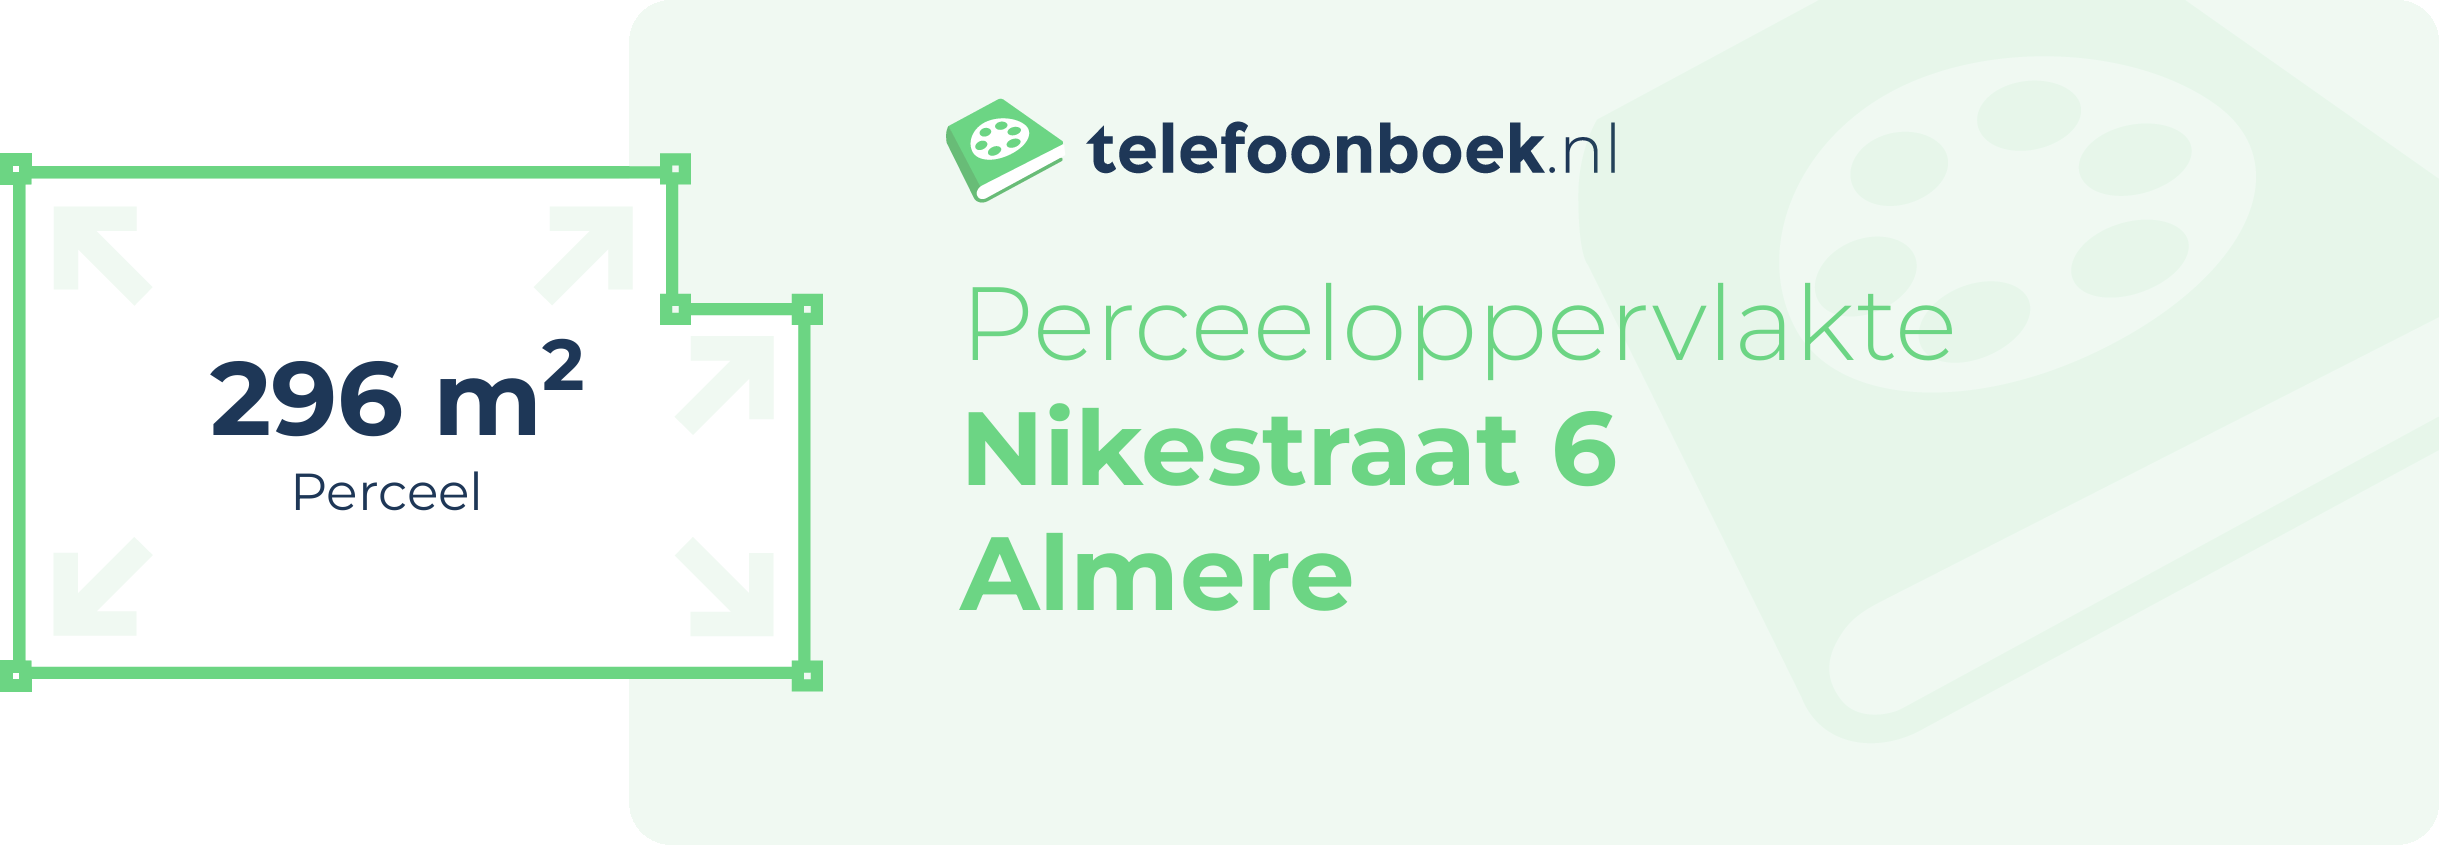 Perceeloppervlakte Nikestraat 6 Almere